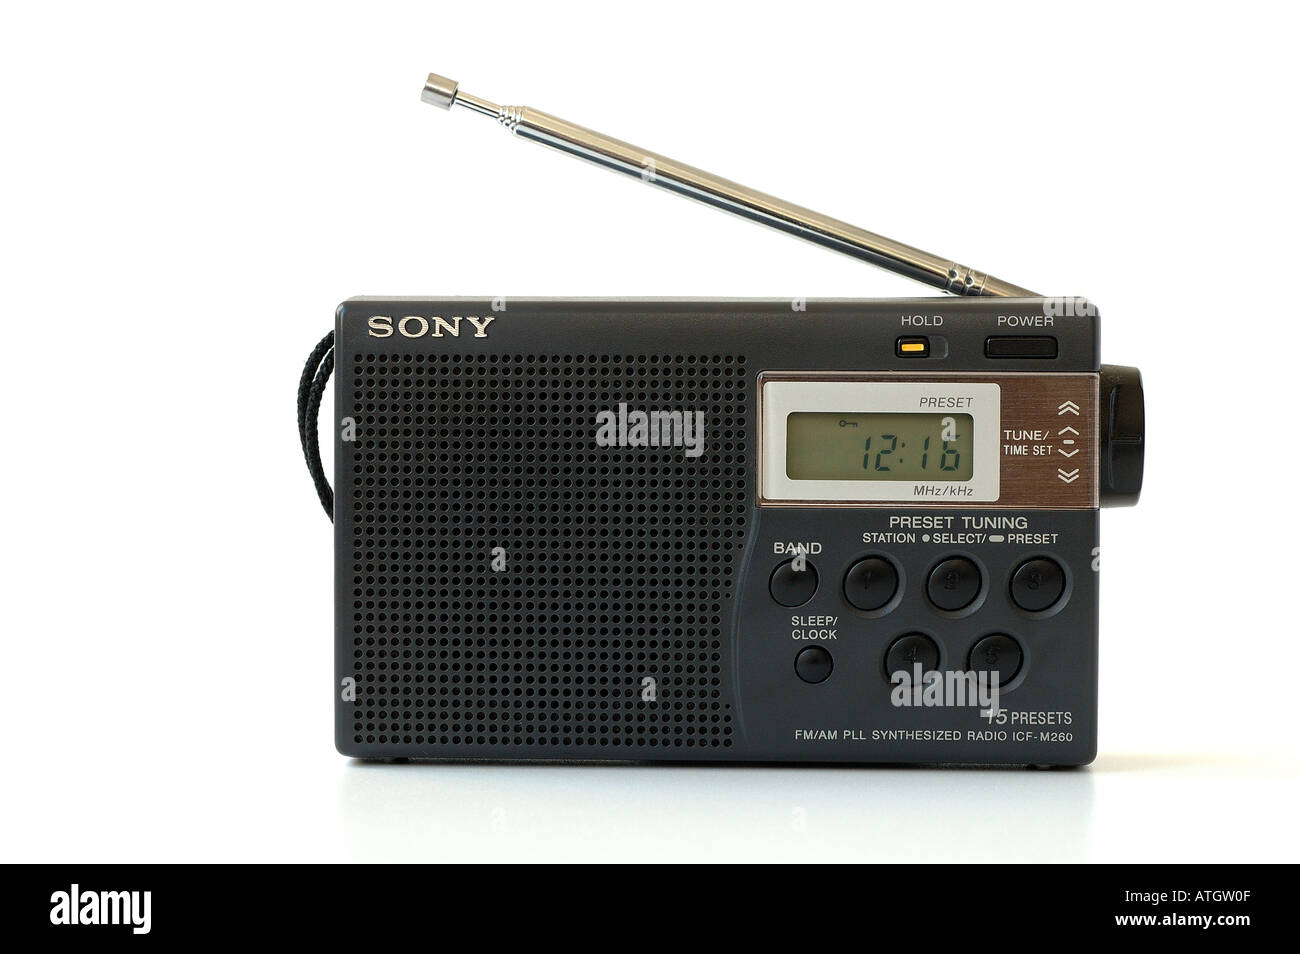 Sony radio FM portable digital receiver Stock Photo